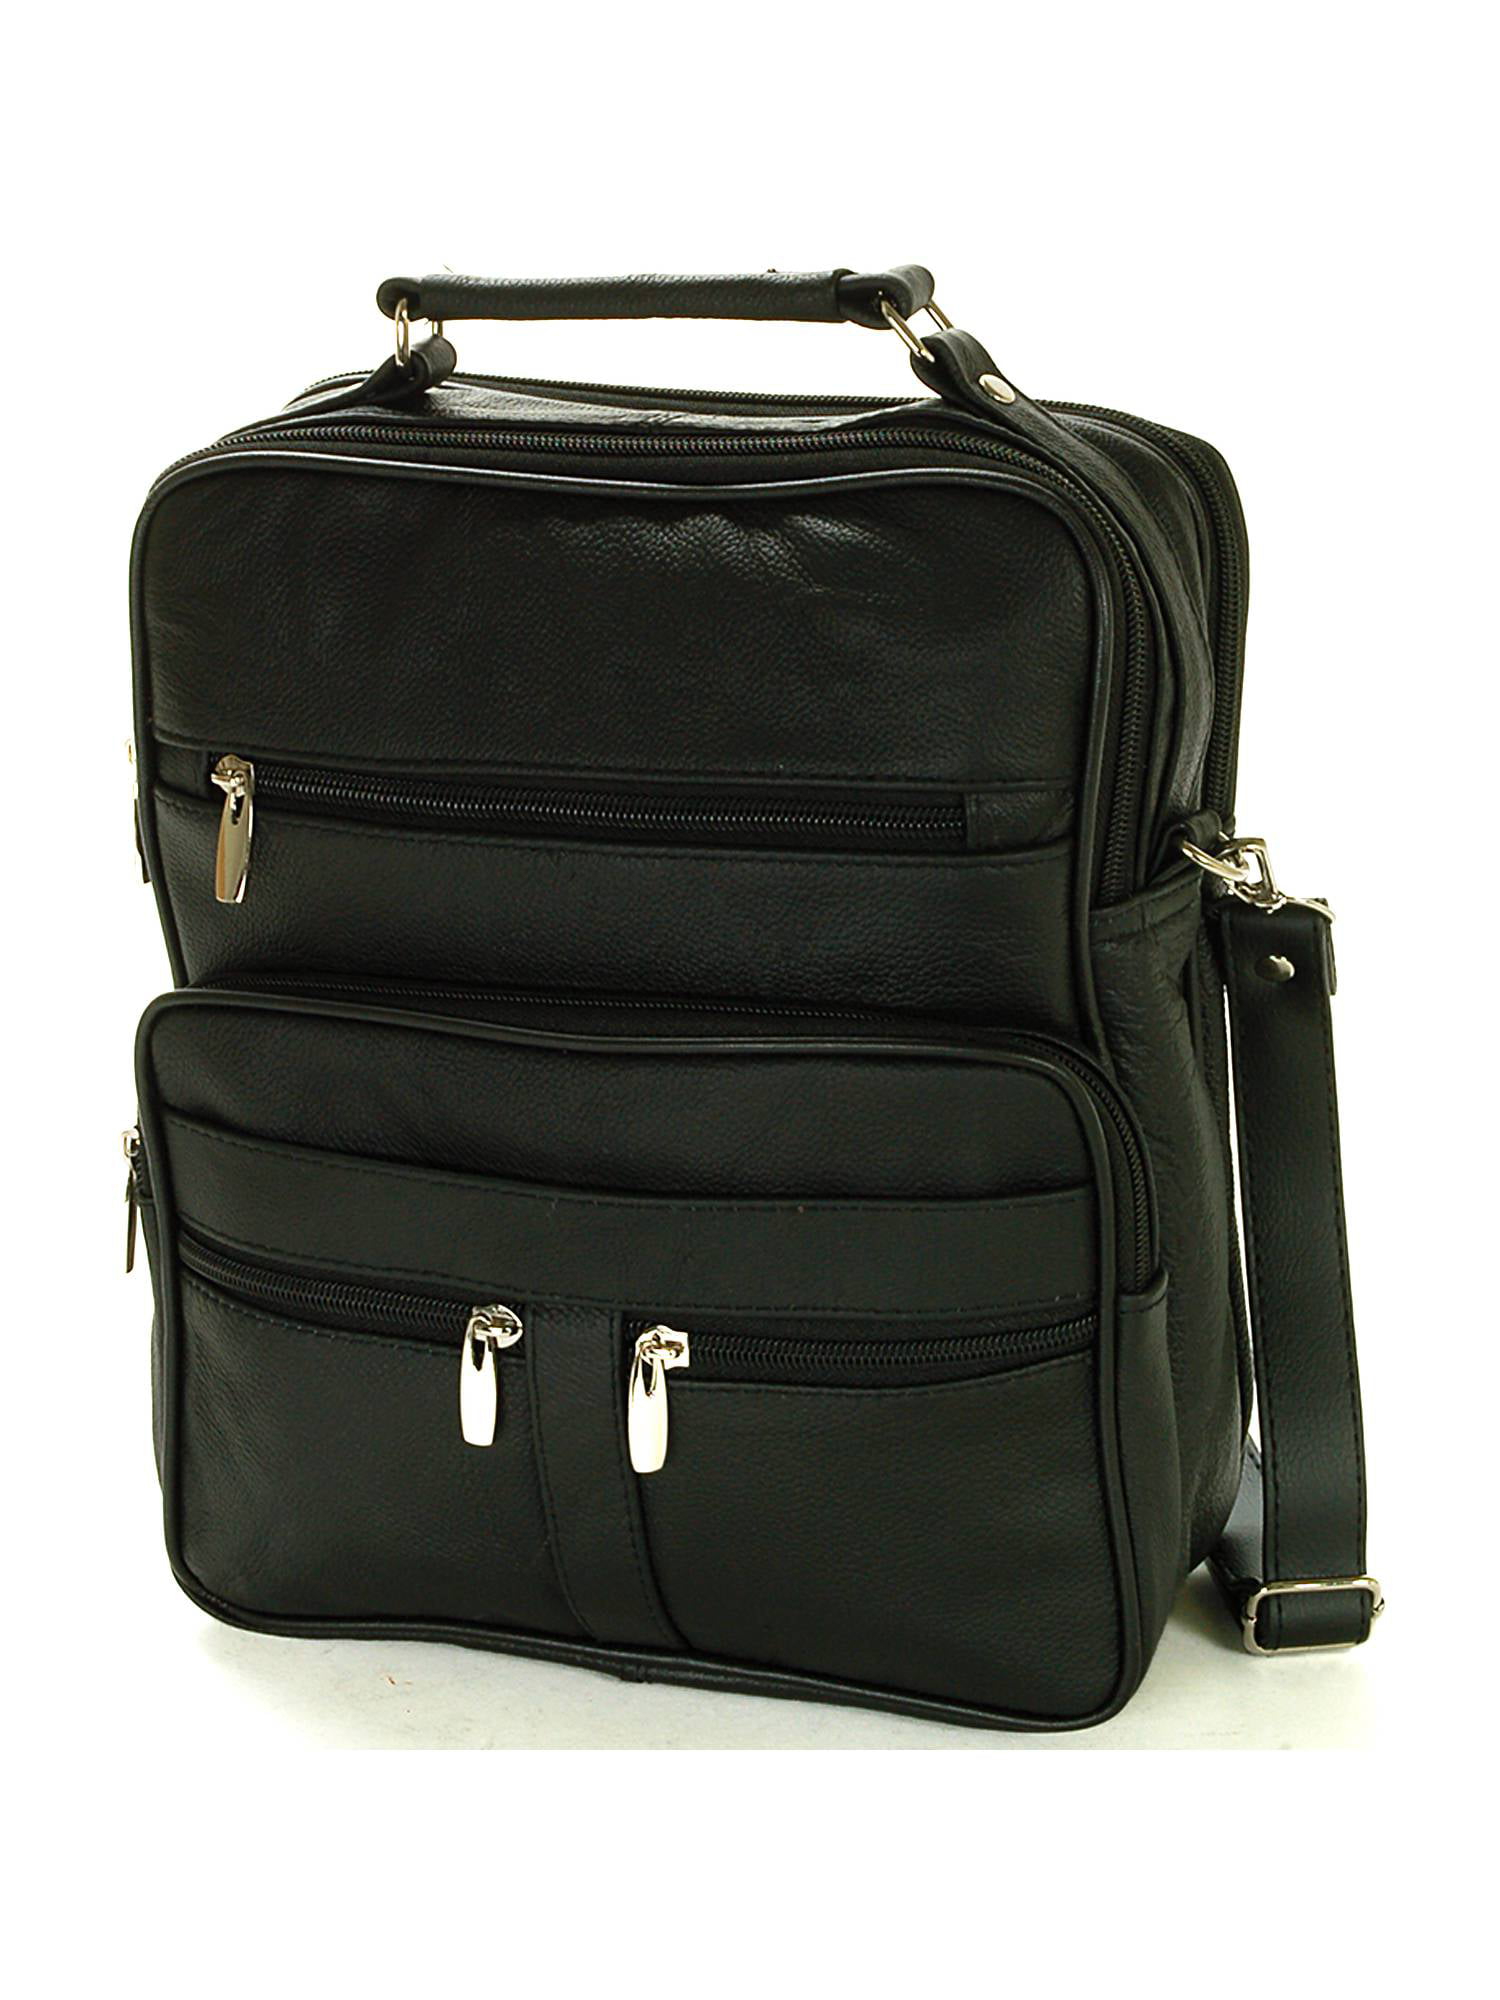 multipurpose travel organizer bag